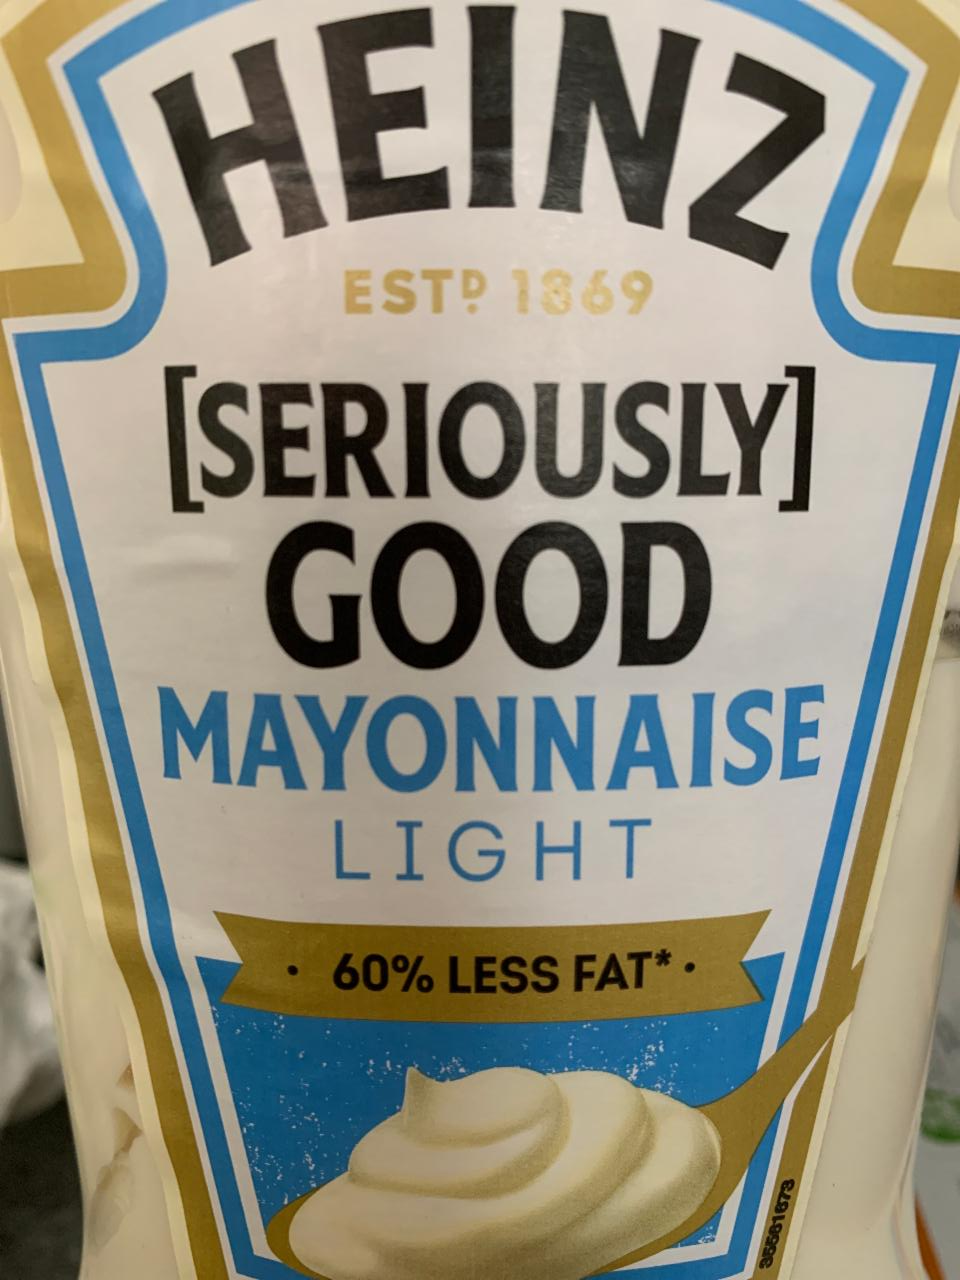 Fotografie - Heinz Seriously Good Mayonnaise Light 60% less fat